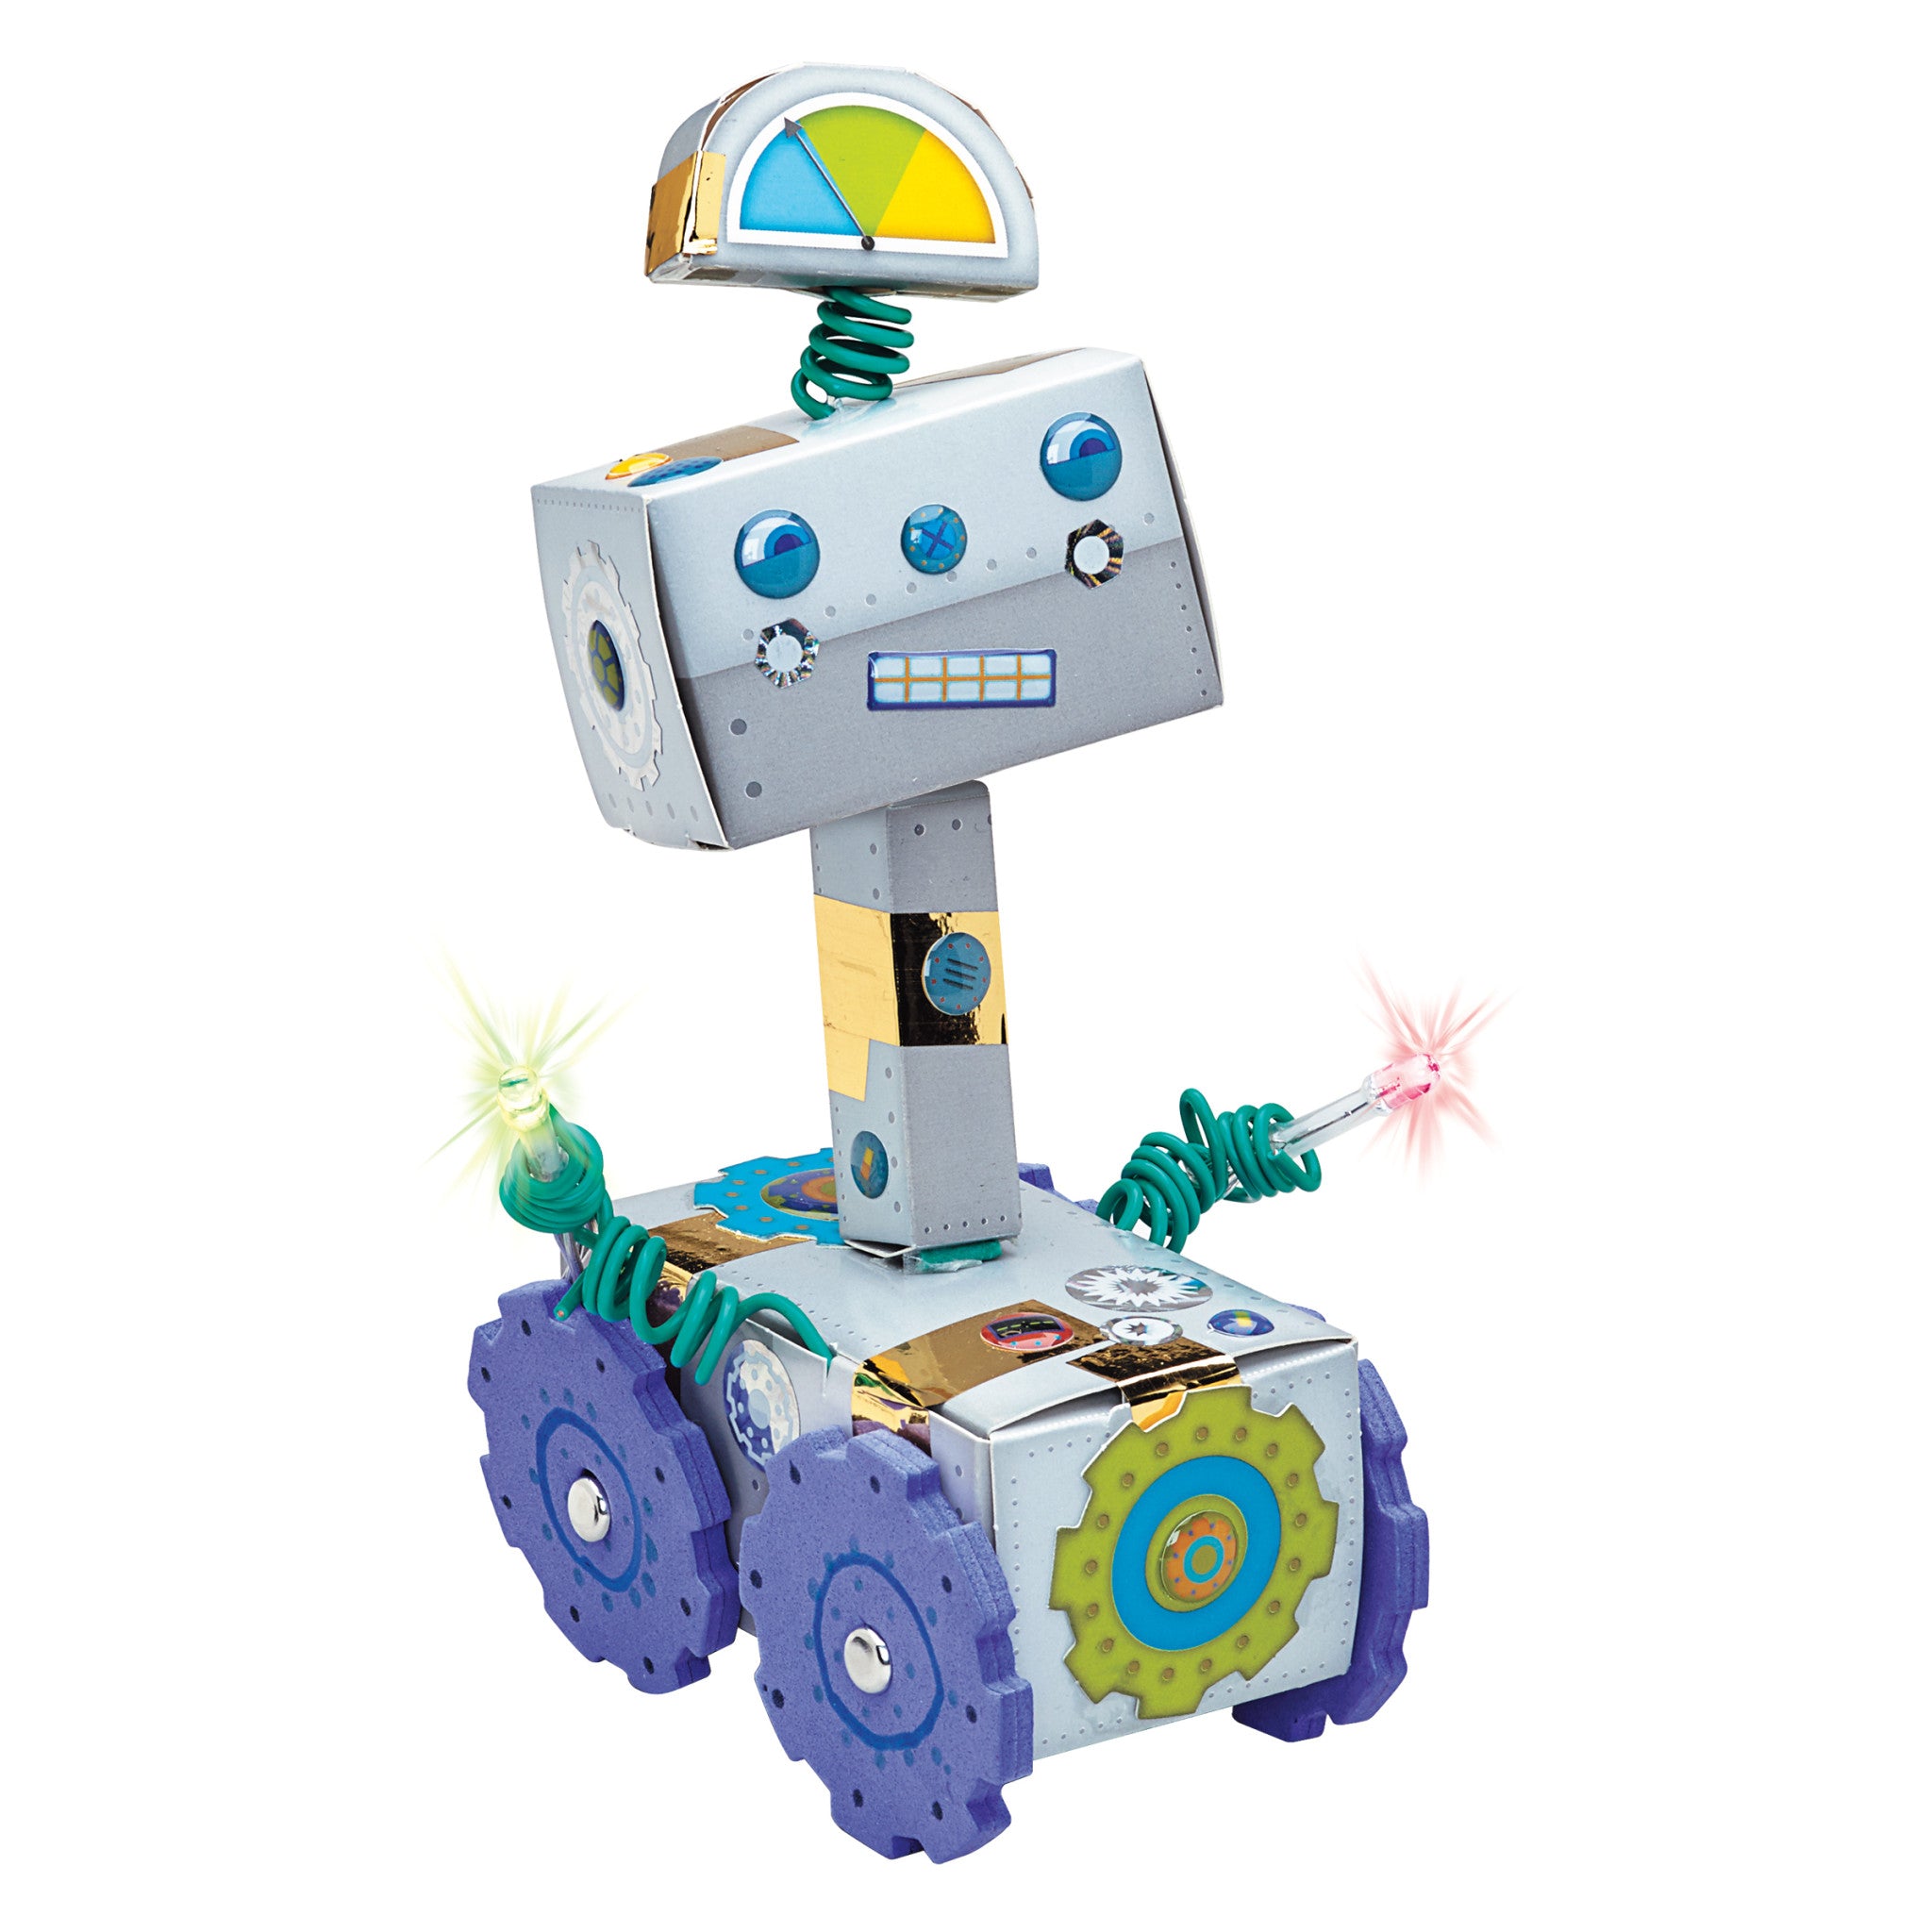 710969 - Kit 500 resistenze 1/4W , da Sparkfun a € 8,20 su Robot Italy